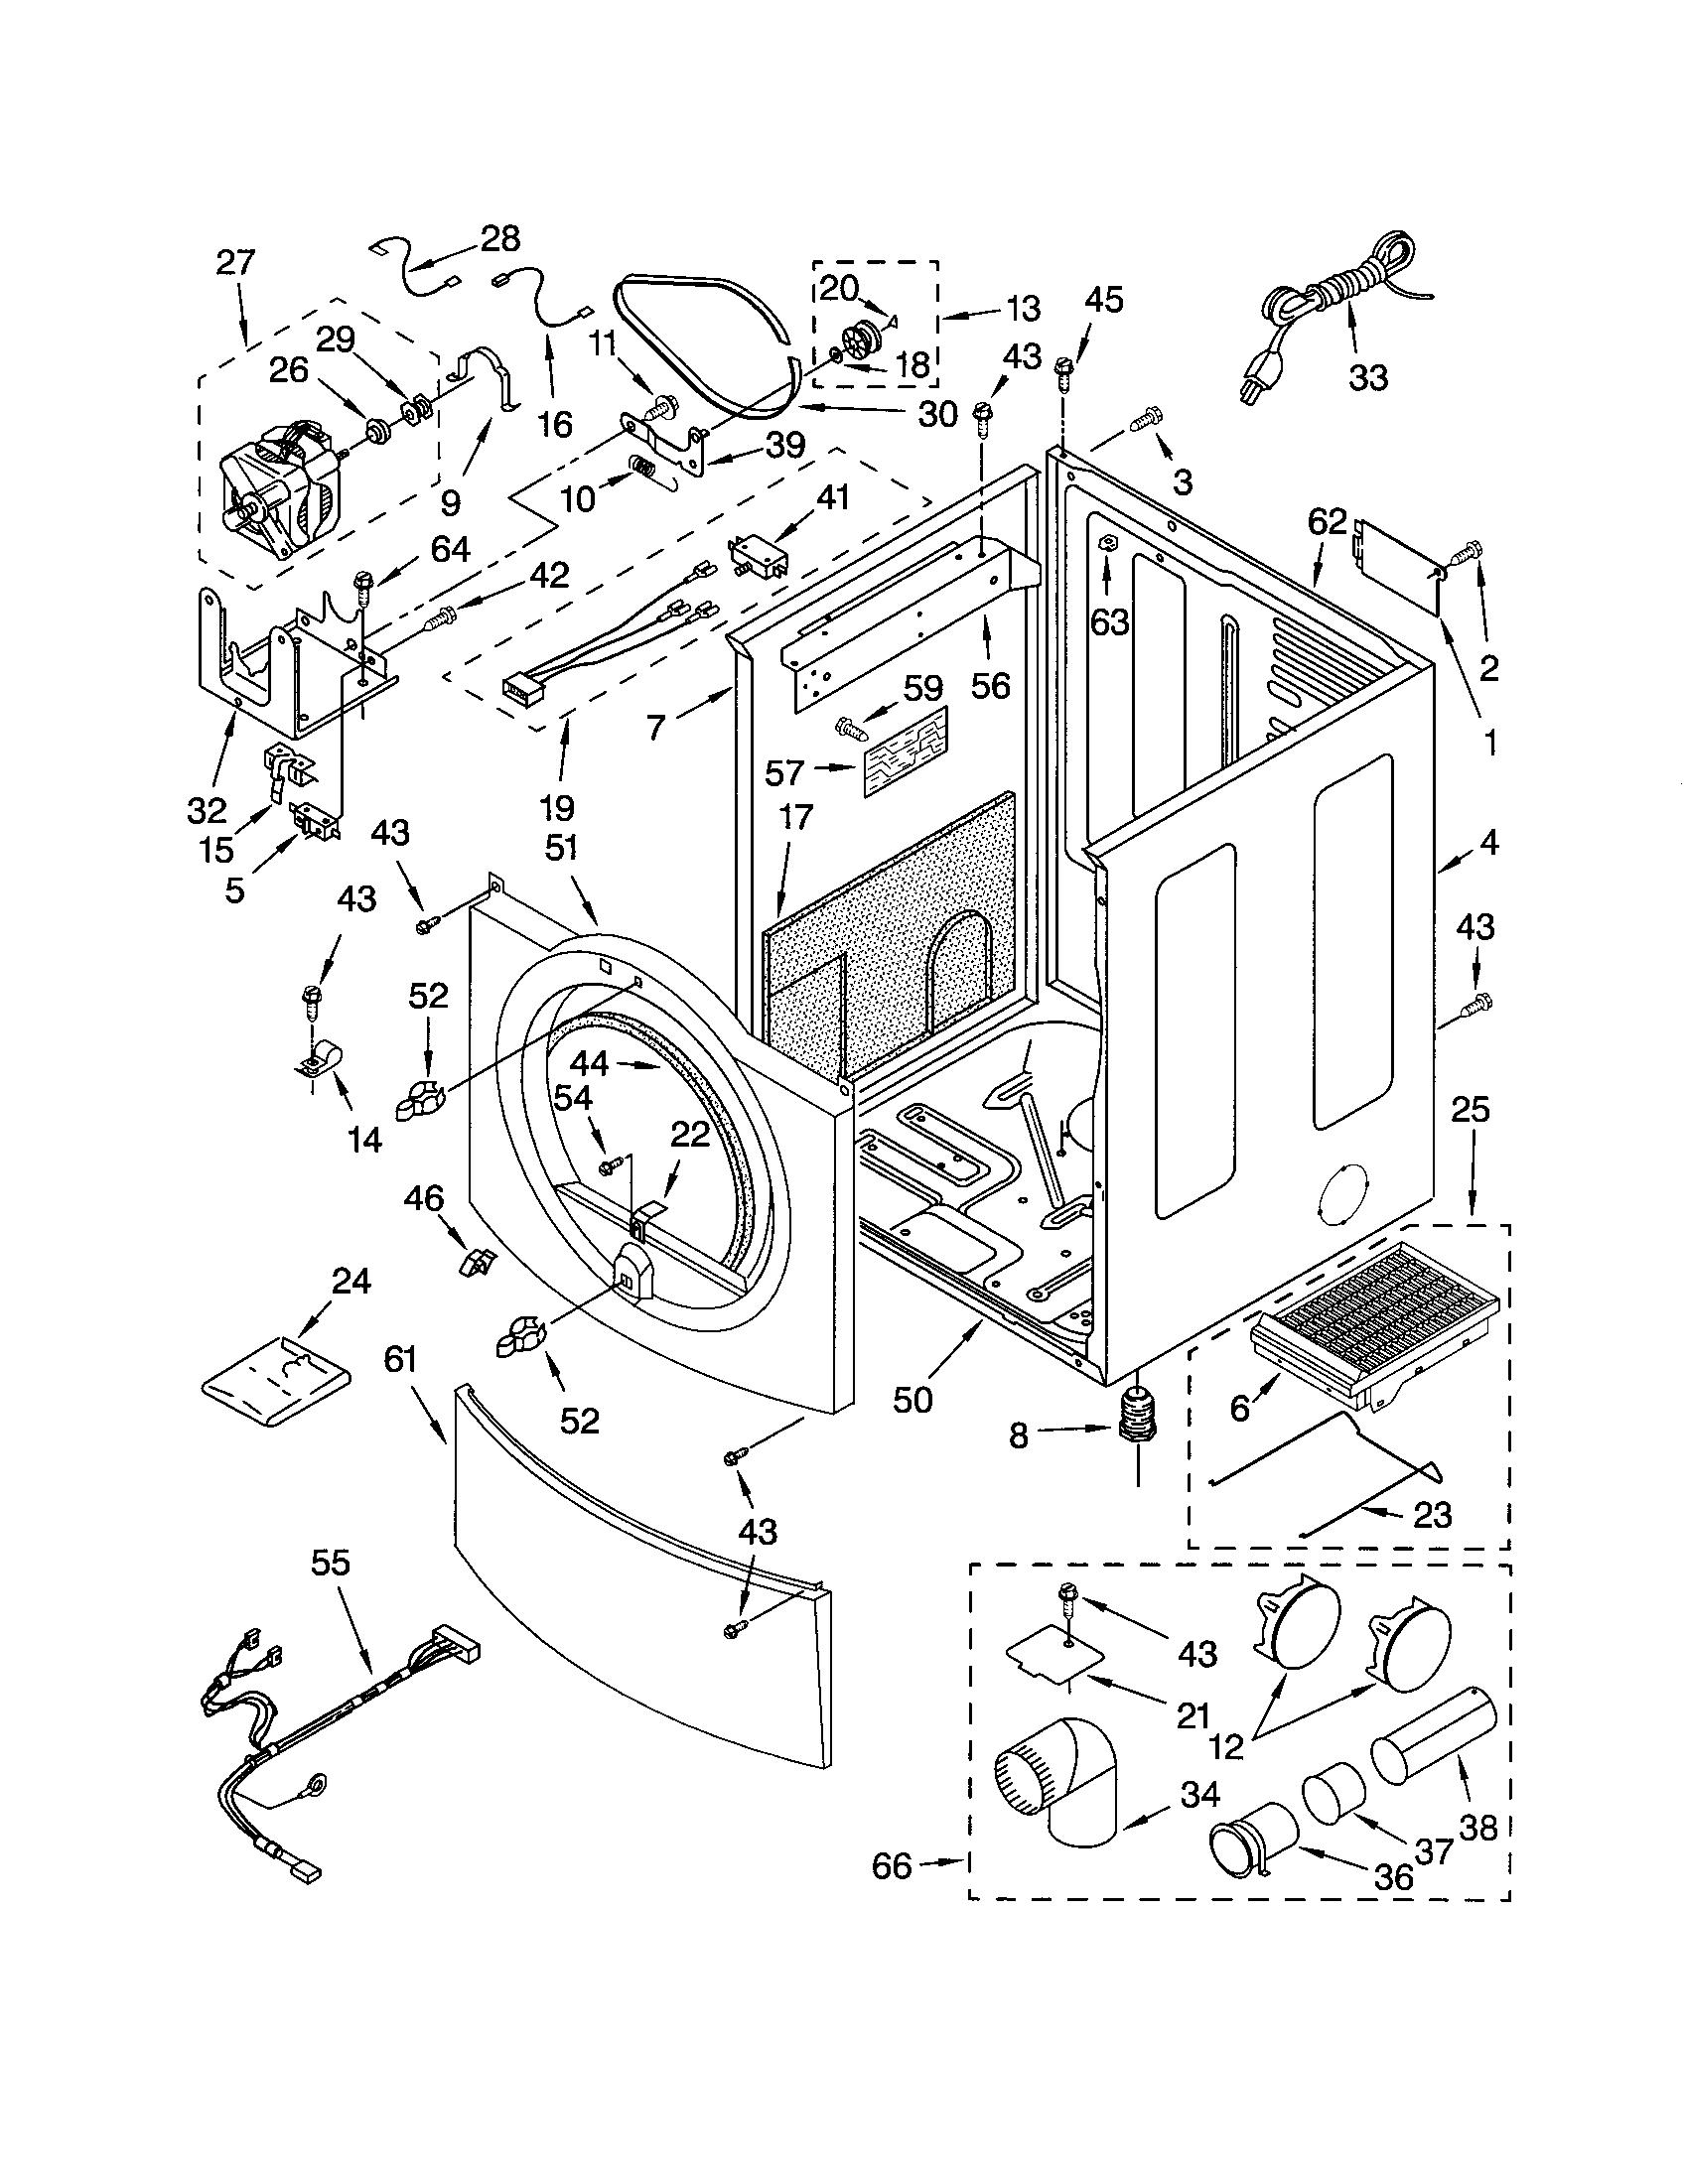 33 Kenmore Dryer Parts Diagram